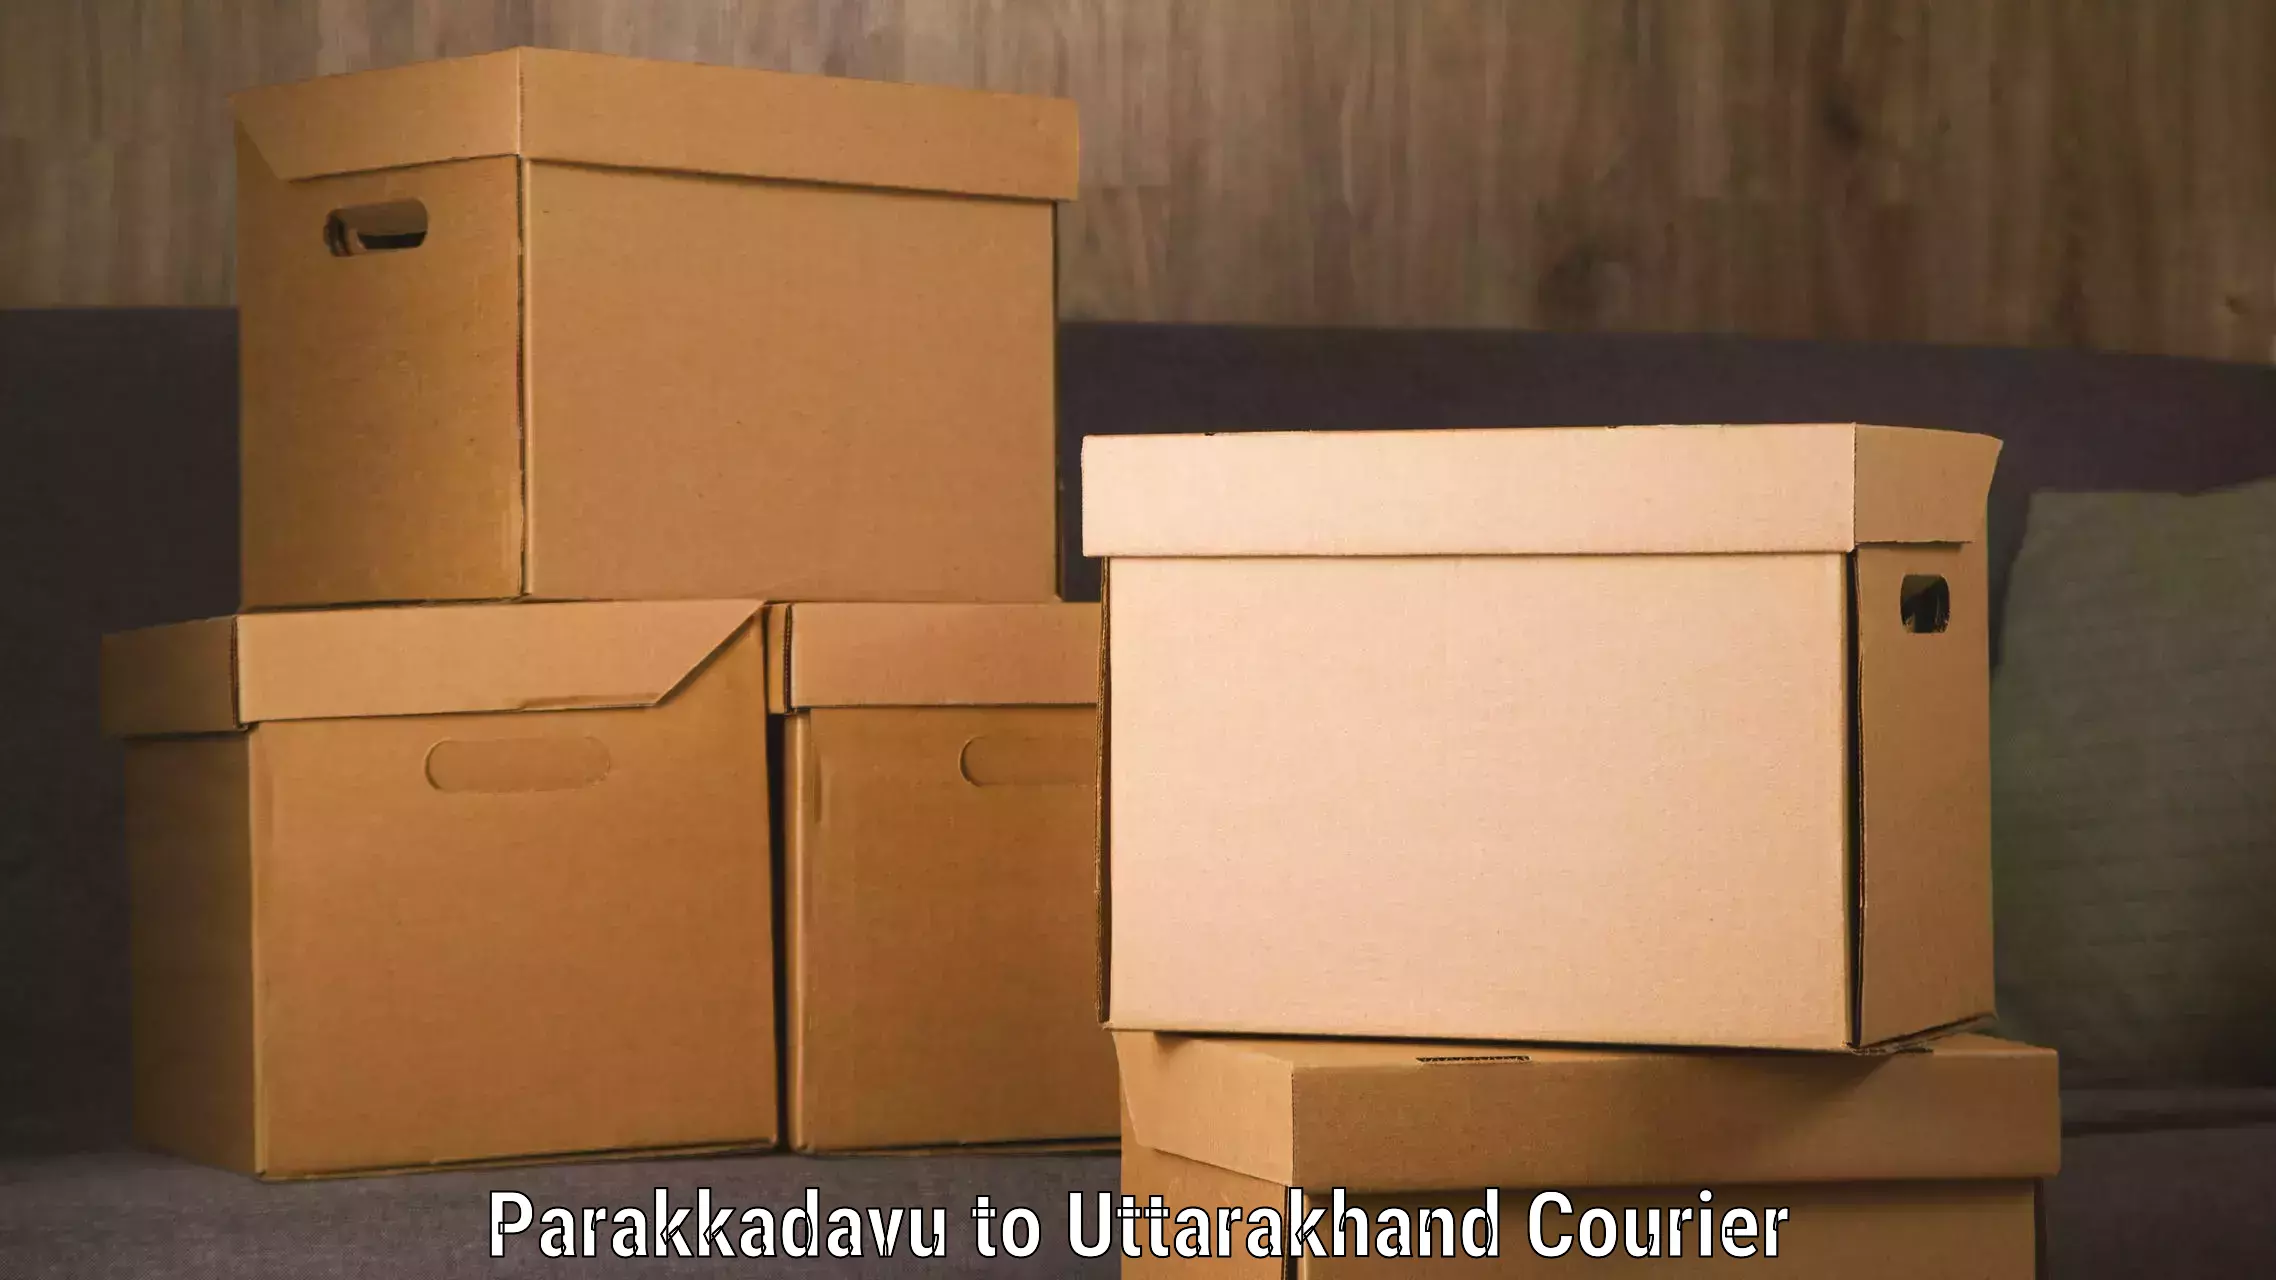 Express package services Parakkadavu to Uttarakhand